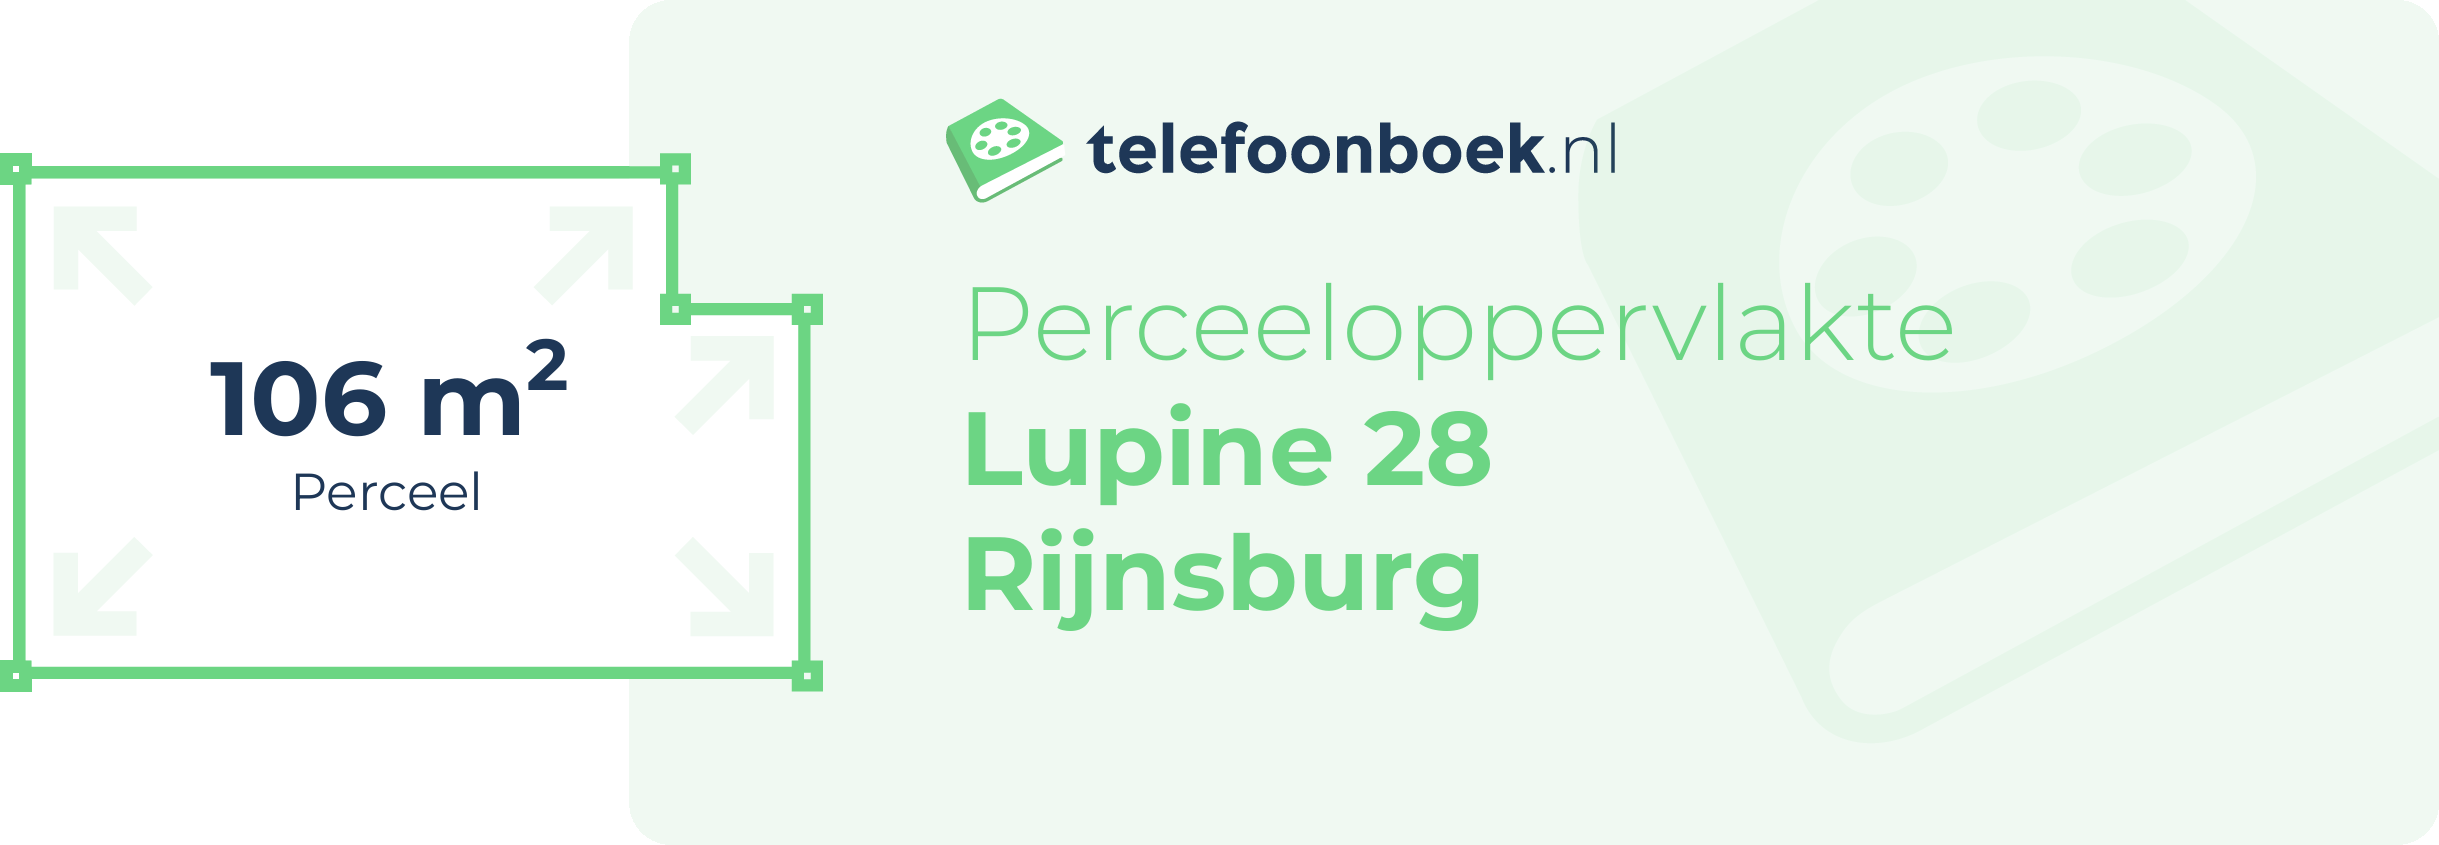 Perceeloppervlakte Lupine 28 Rijnsburg